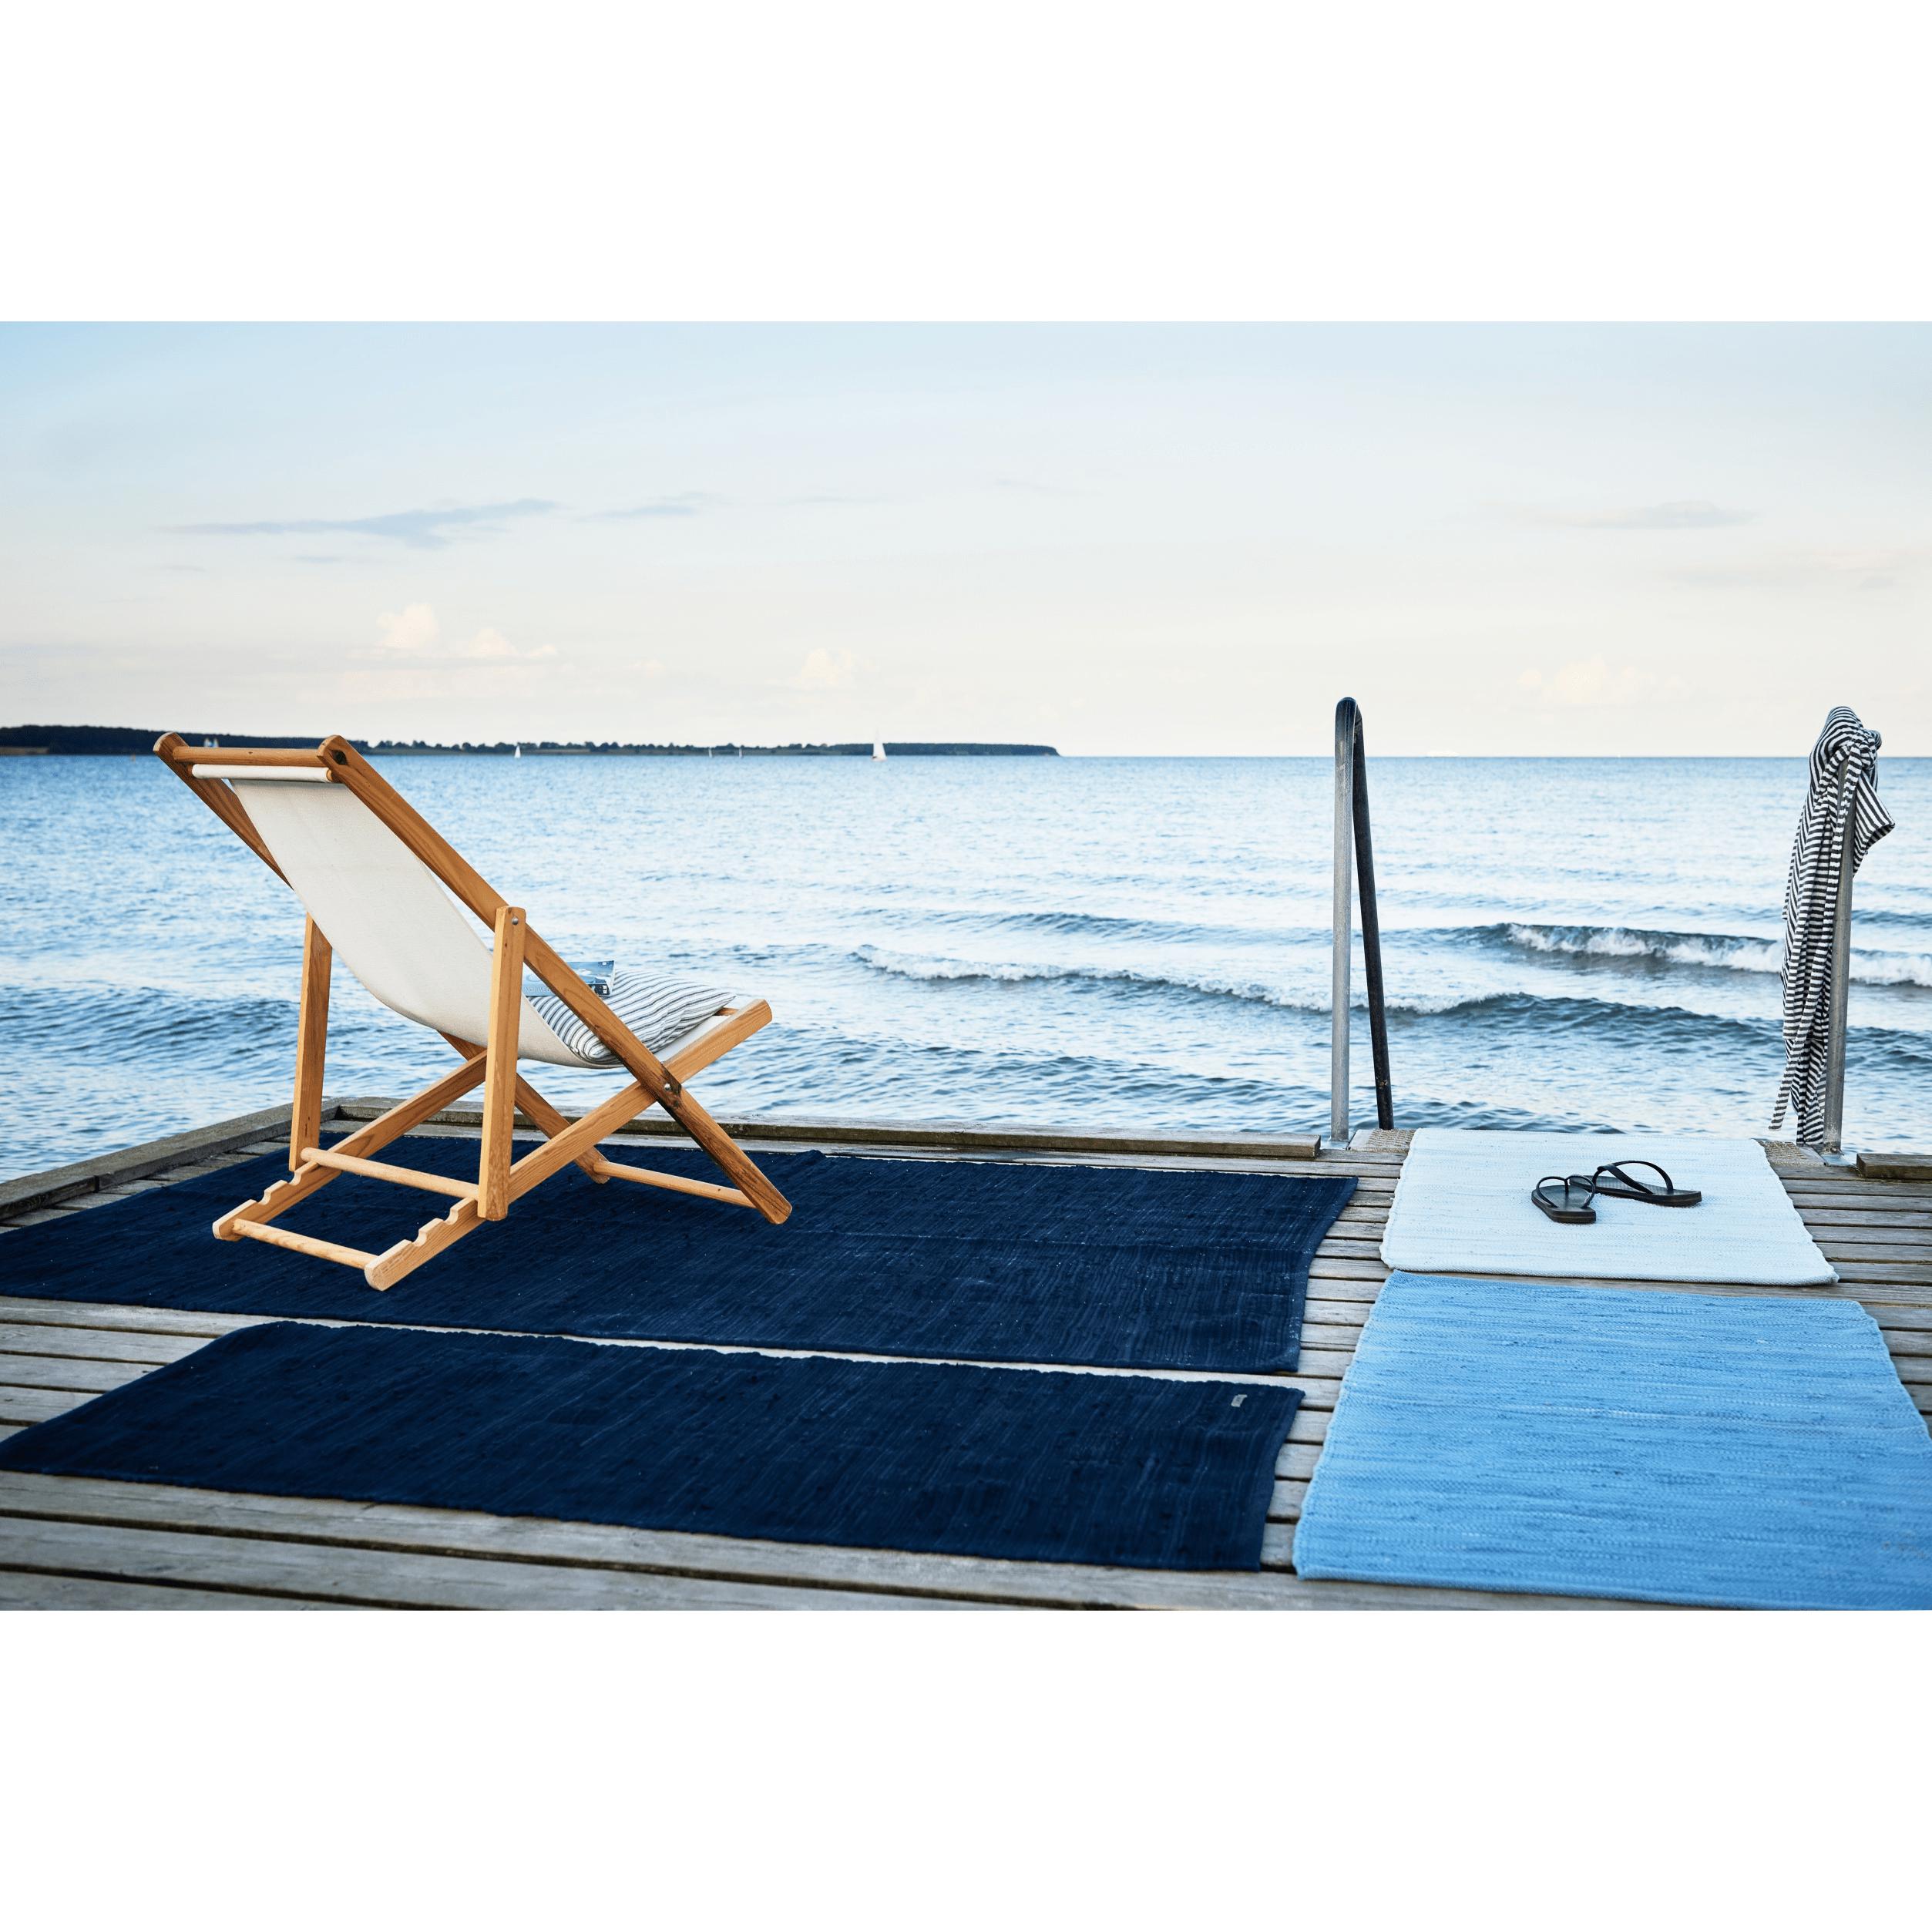 Koberec pevný bavlněný koberec hluboký oceán modrá, 140 x 200 cm